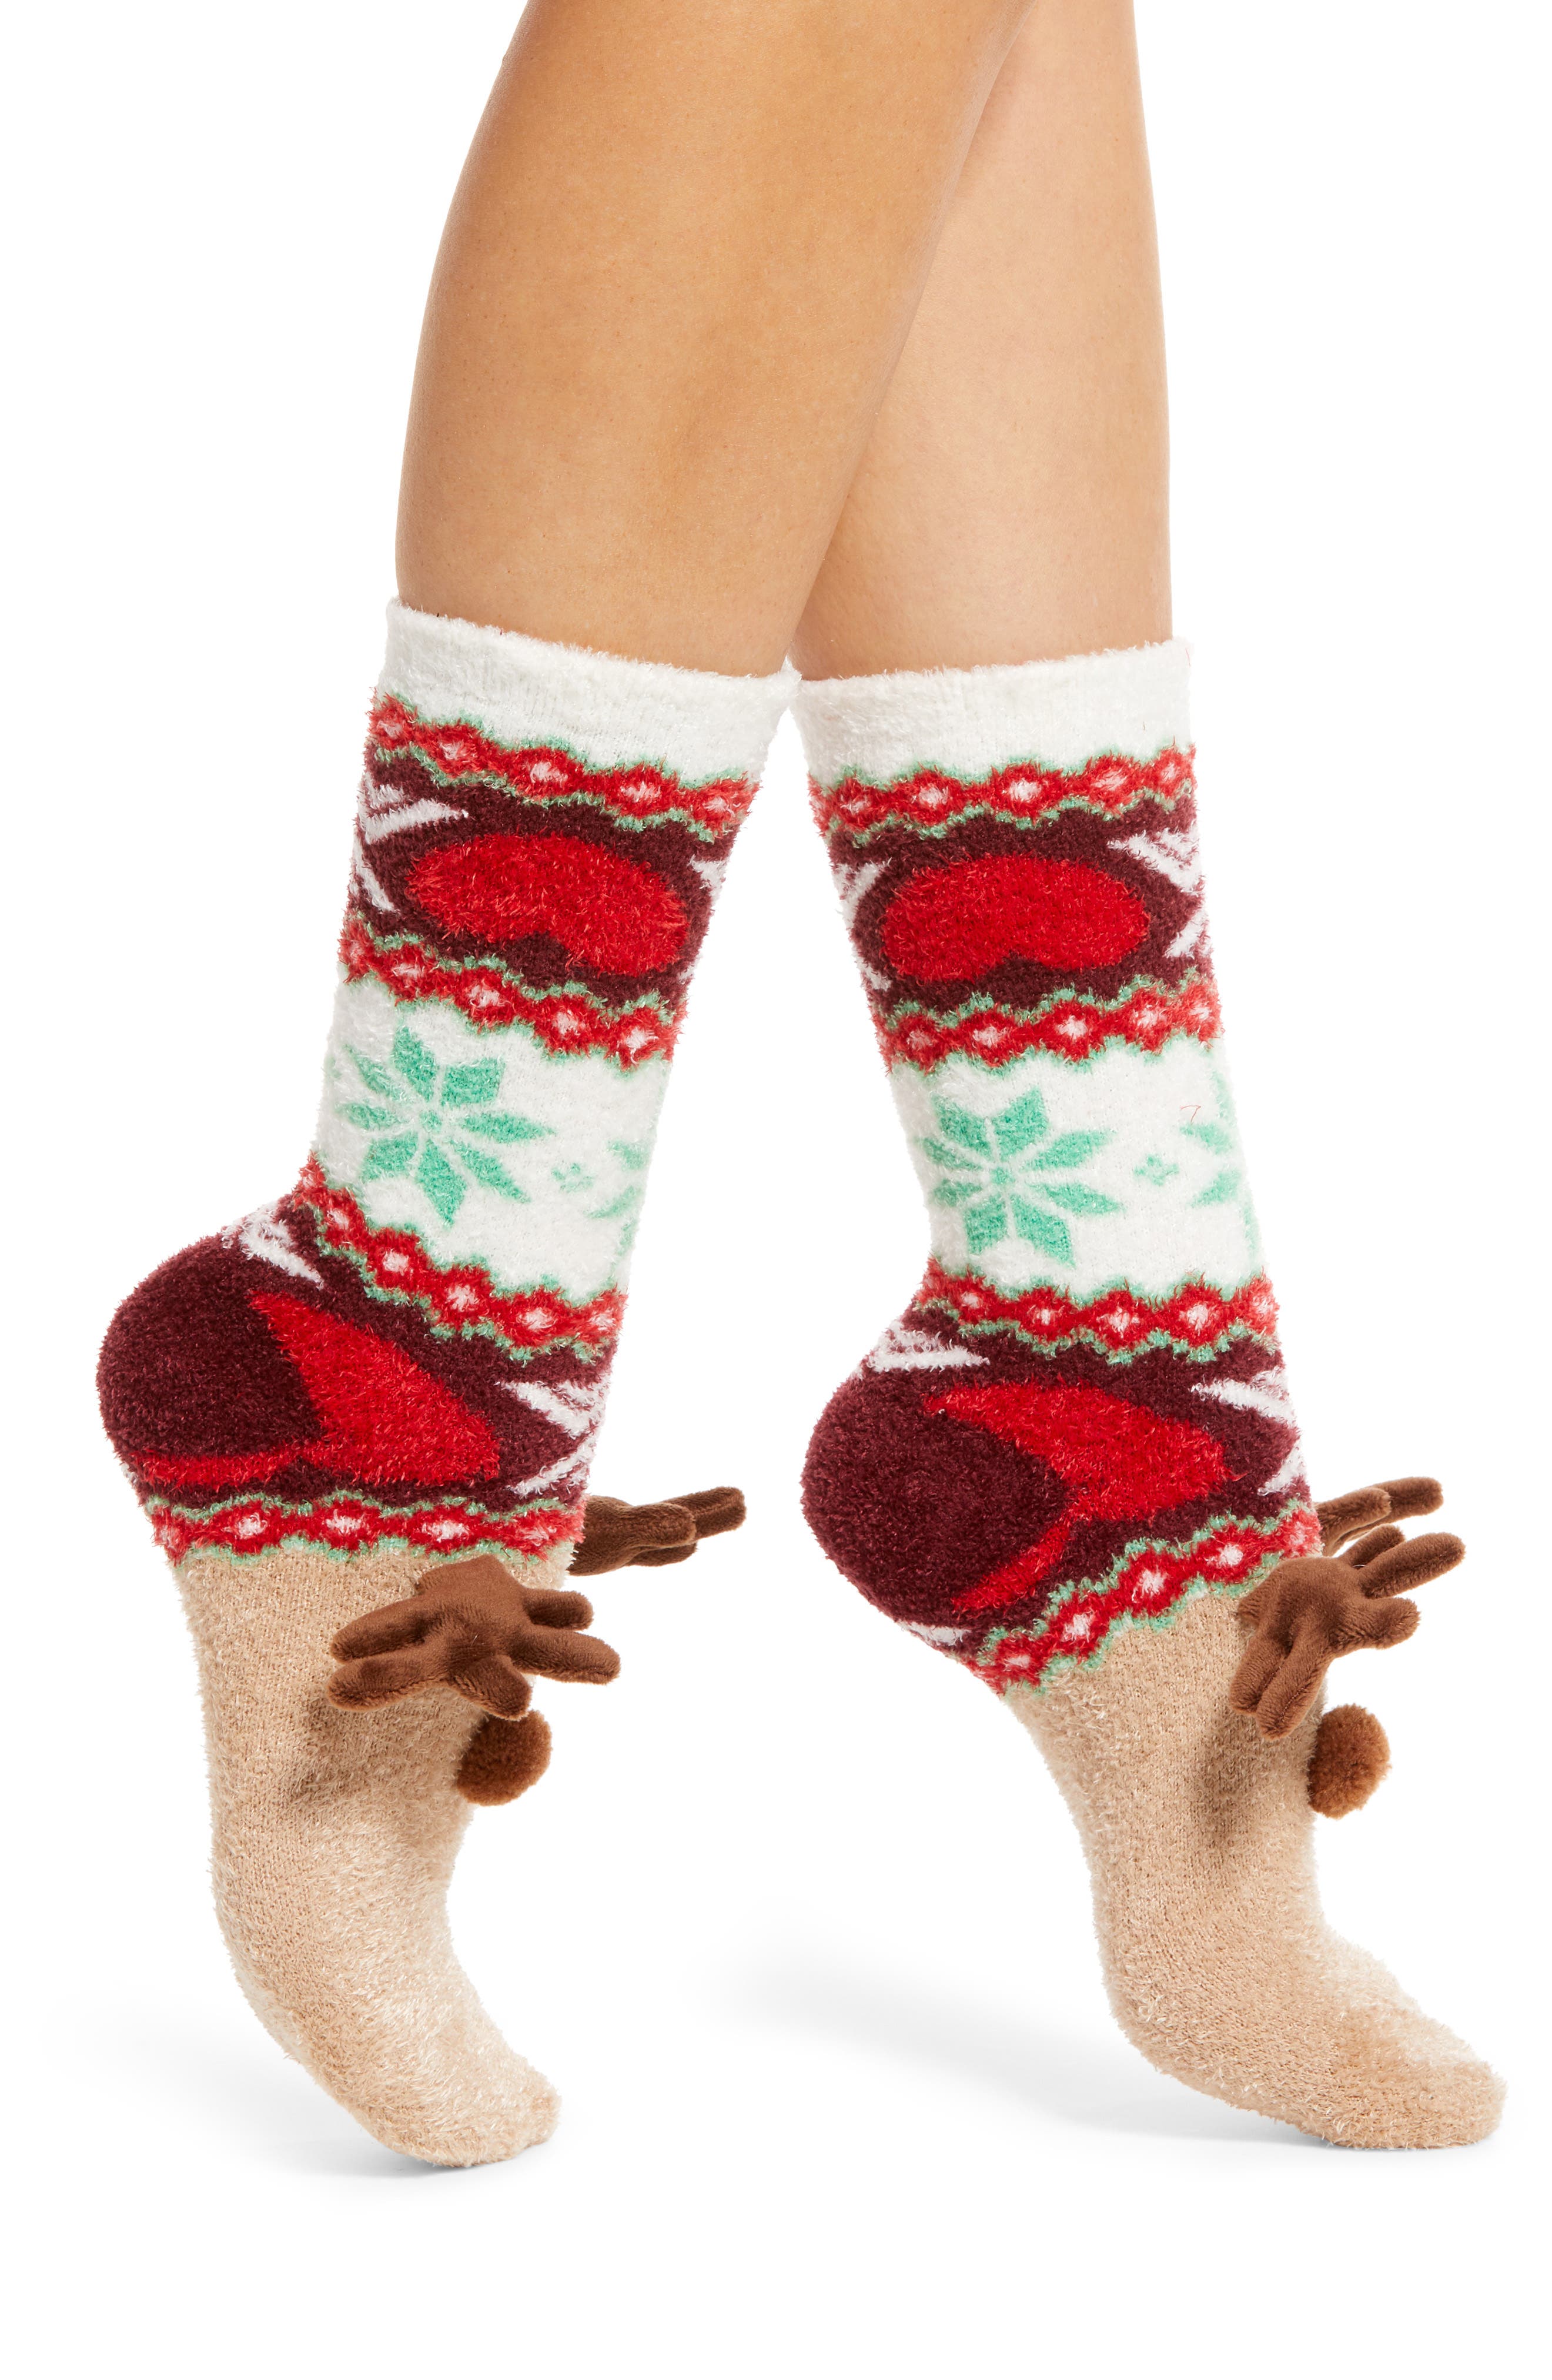 Natural RoToTo Cotton Slub Ankle Socks in Beige Womens Clothing Hosiery Socks 